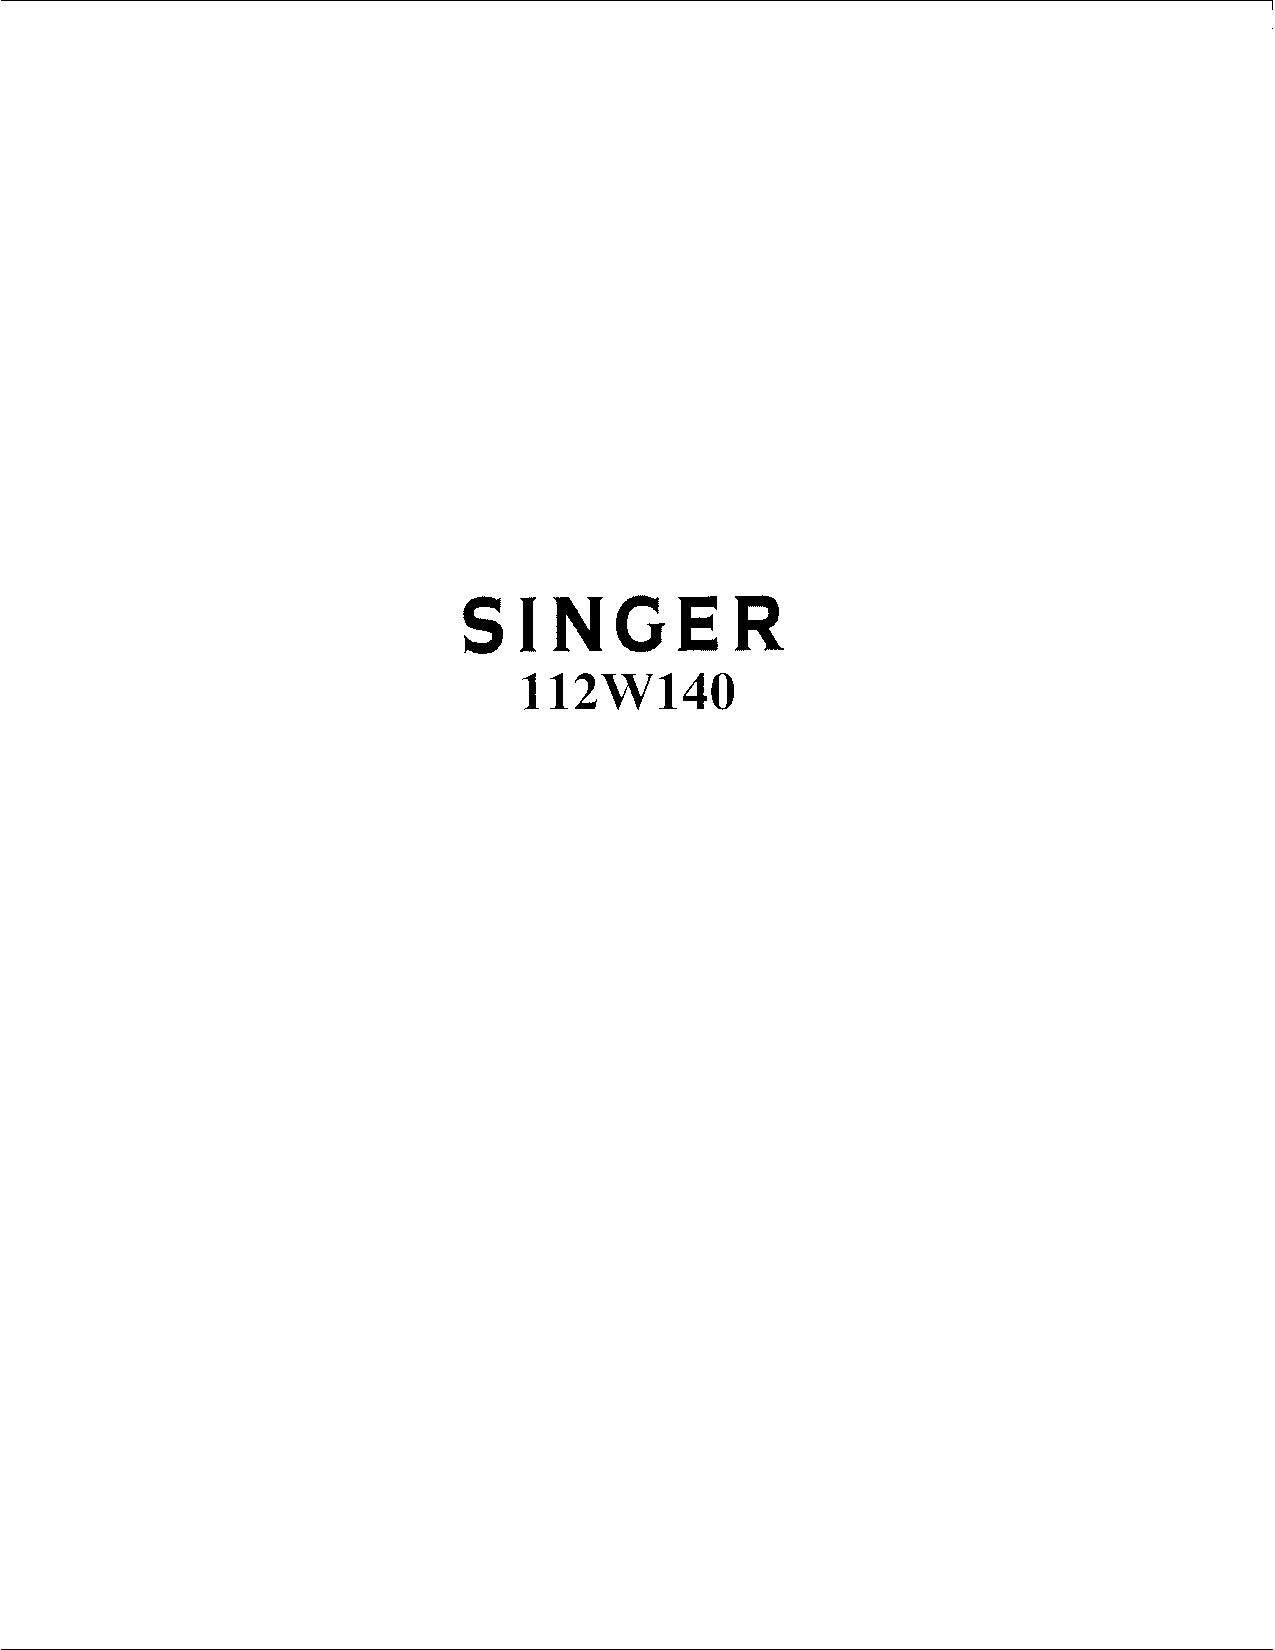 Singer 112W140 User Manual